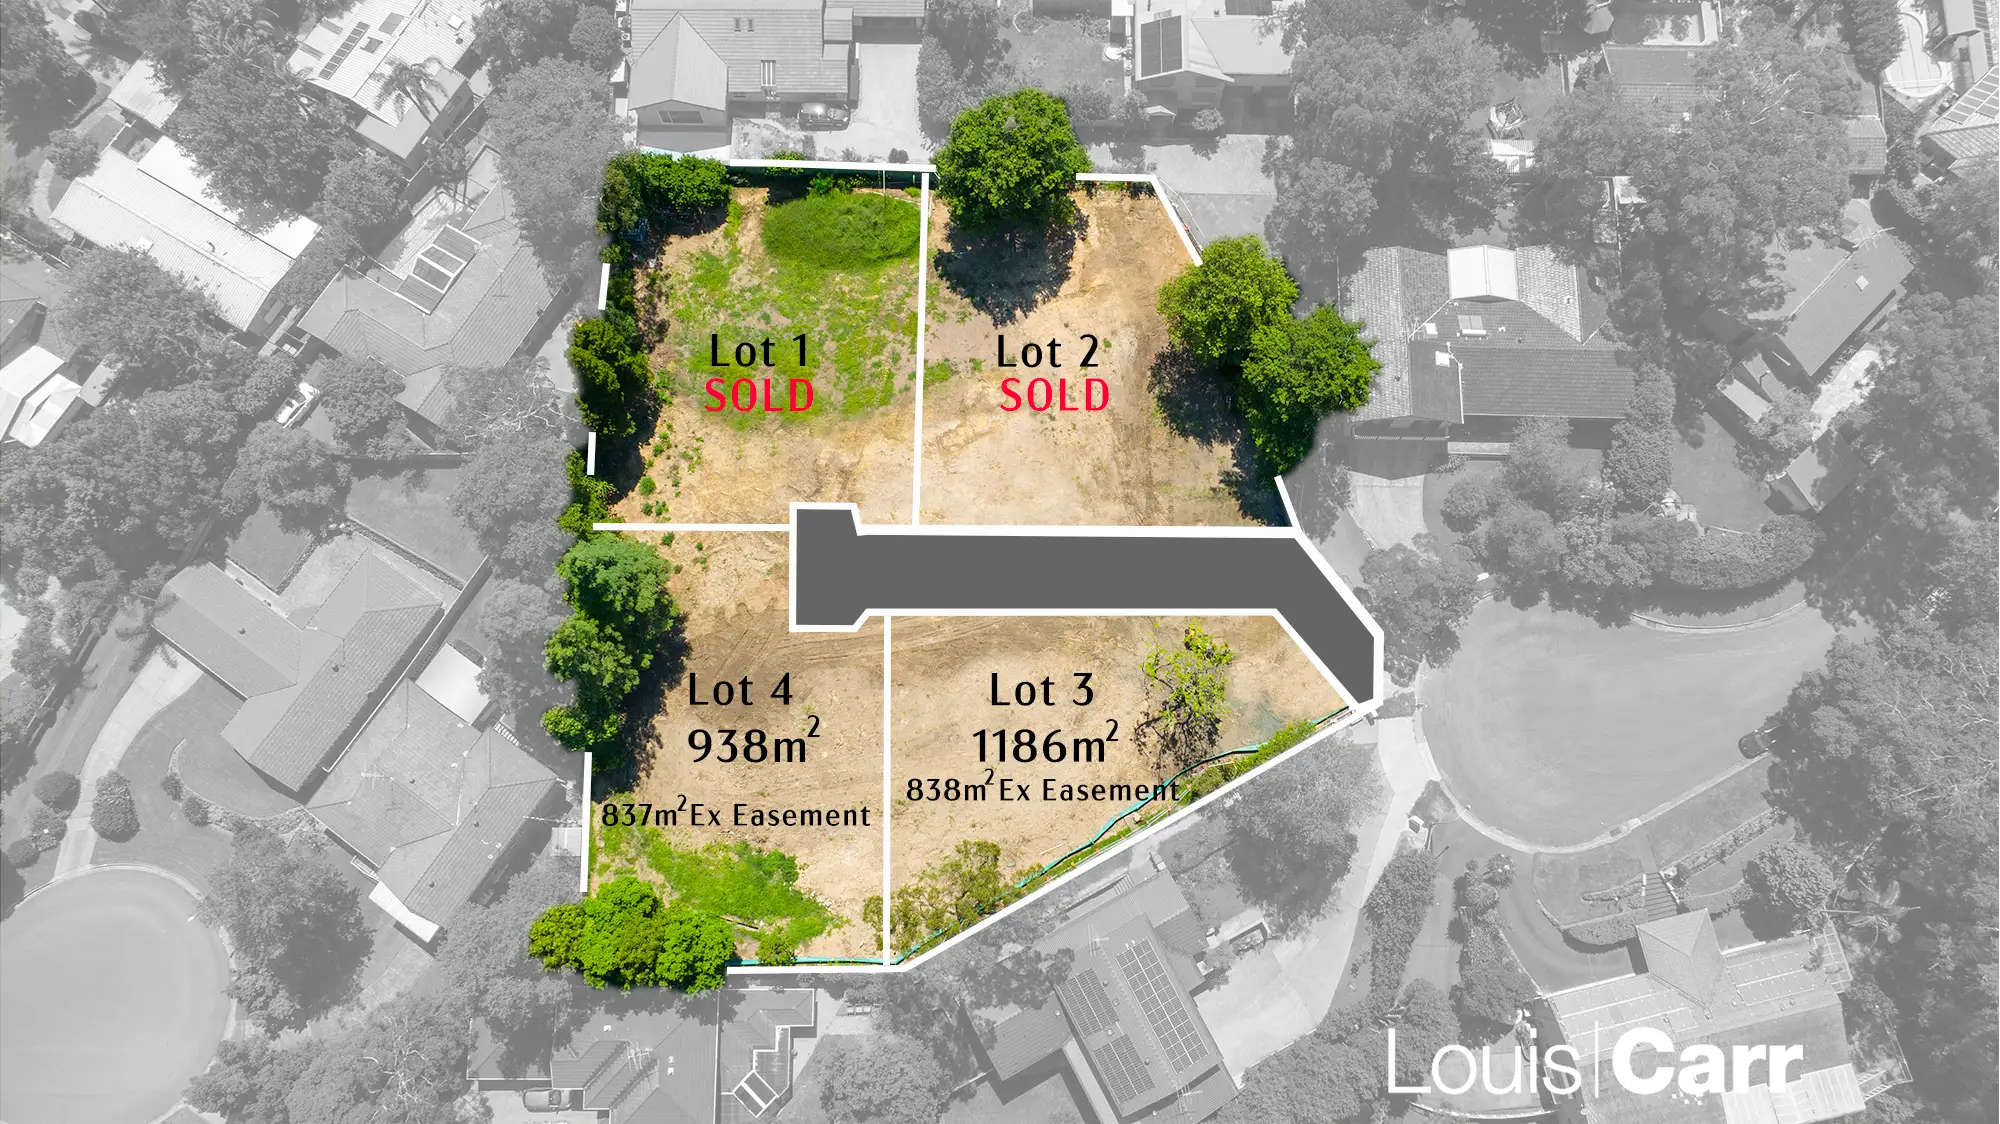 Lot 4, 12 Nanette Place, Castle Hill Sold by Louis Carr Real Estate - image 1